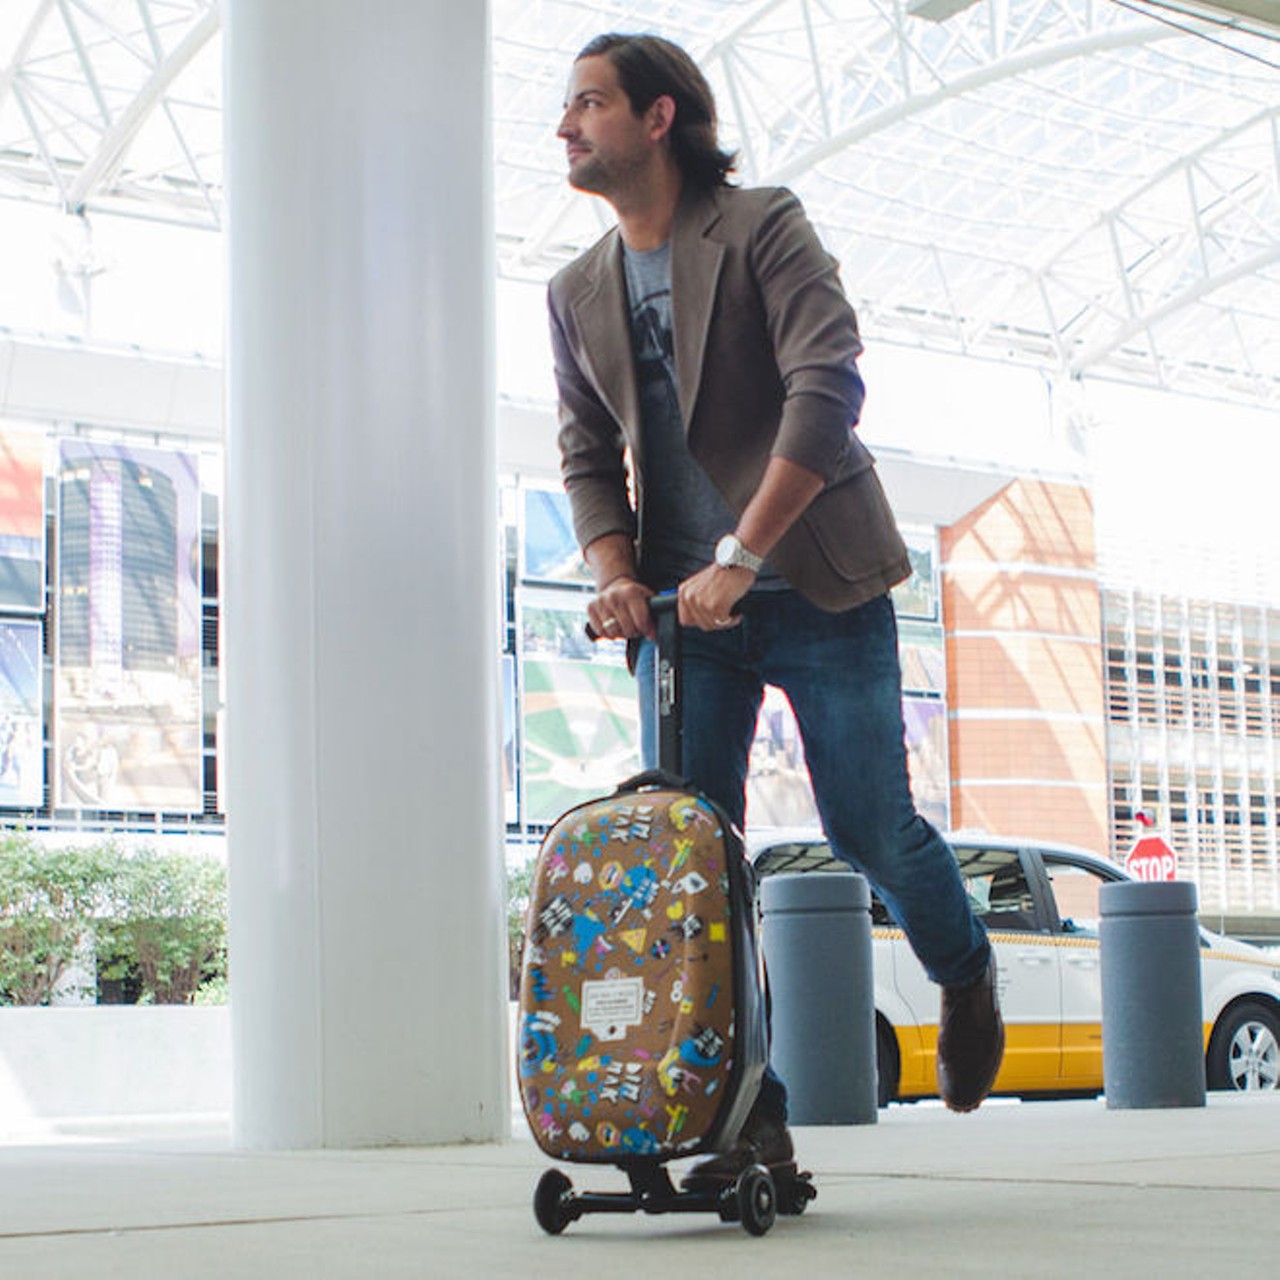 The Steve Aoki kickboard luggage scooter with bluetooth speaker.